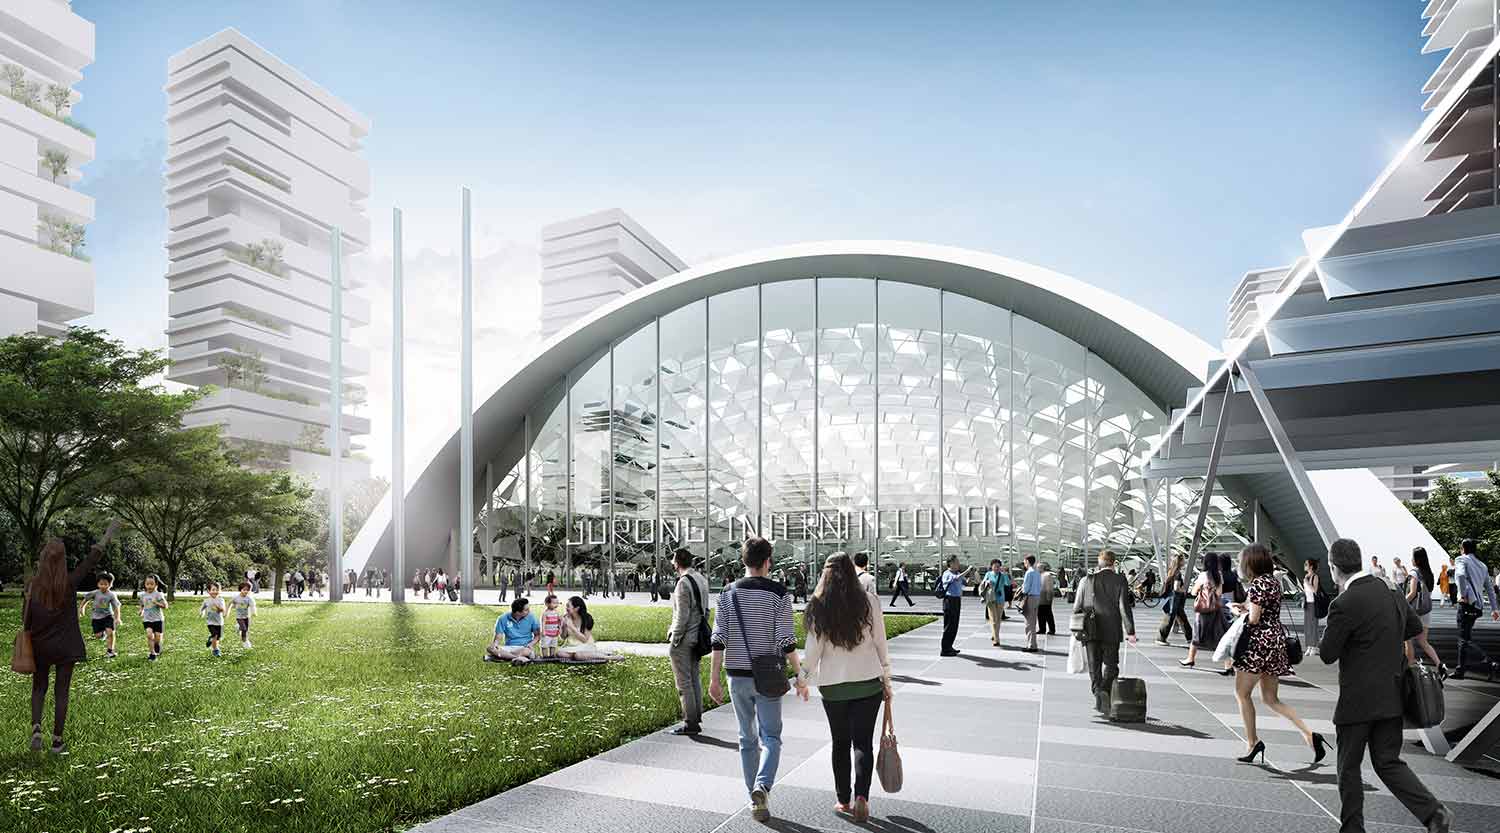 Singapore HSE station concept